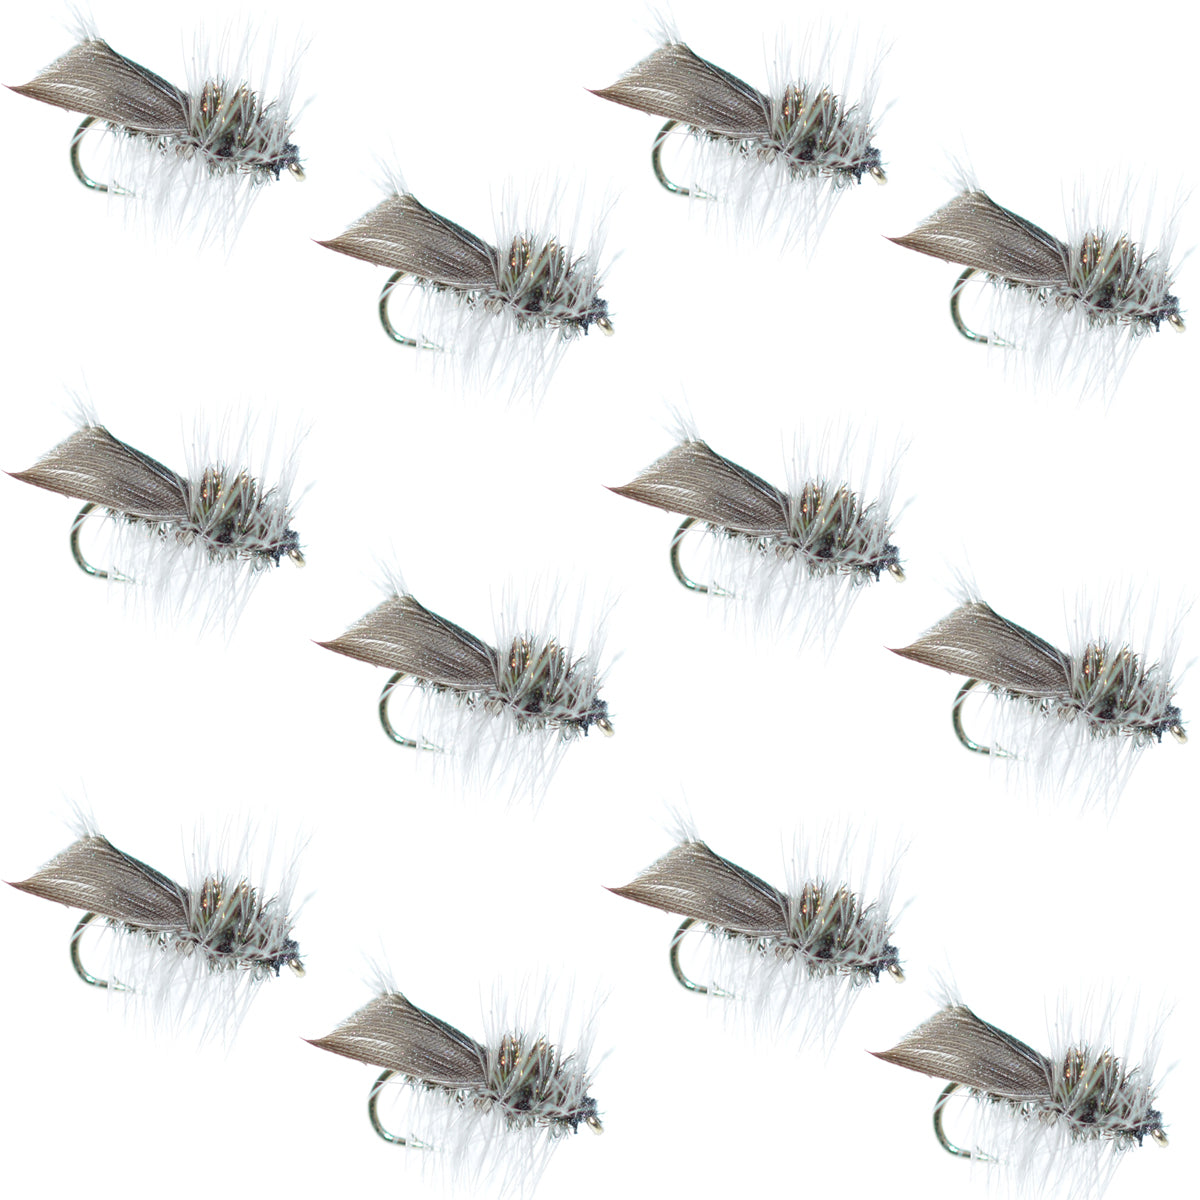 Hemingway Caddis Dry Fly - 1 docena de moscas anzuelo tamaño 14